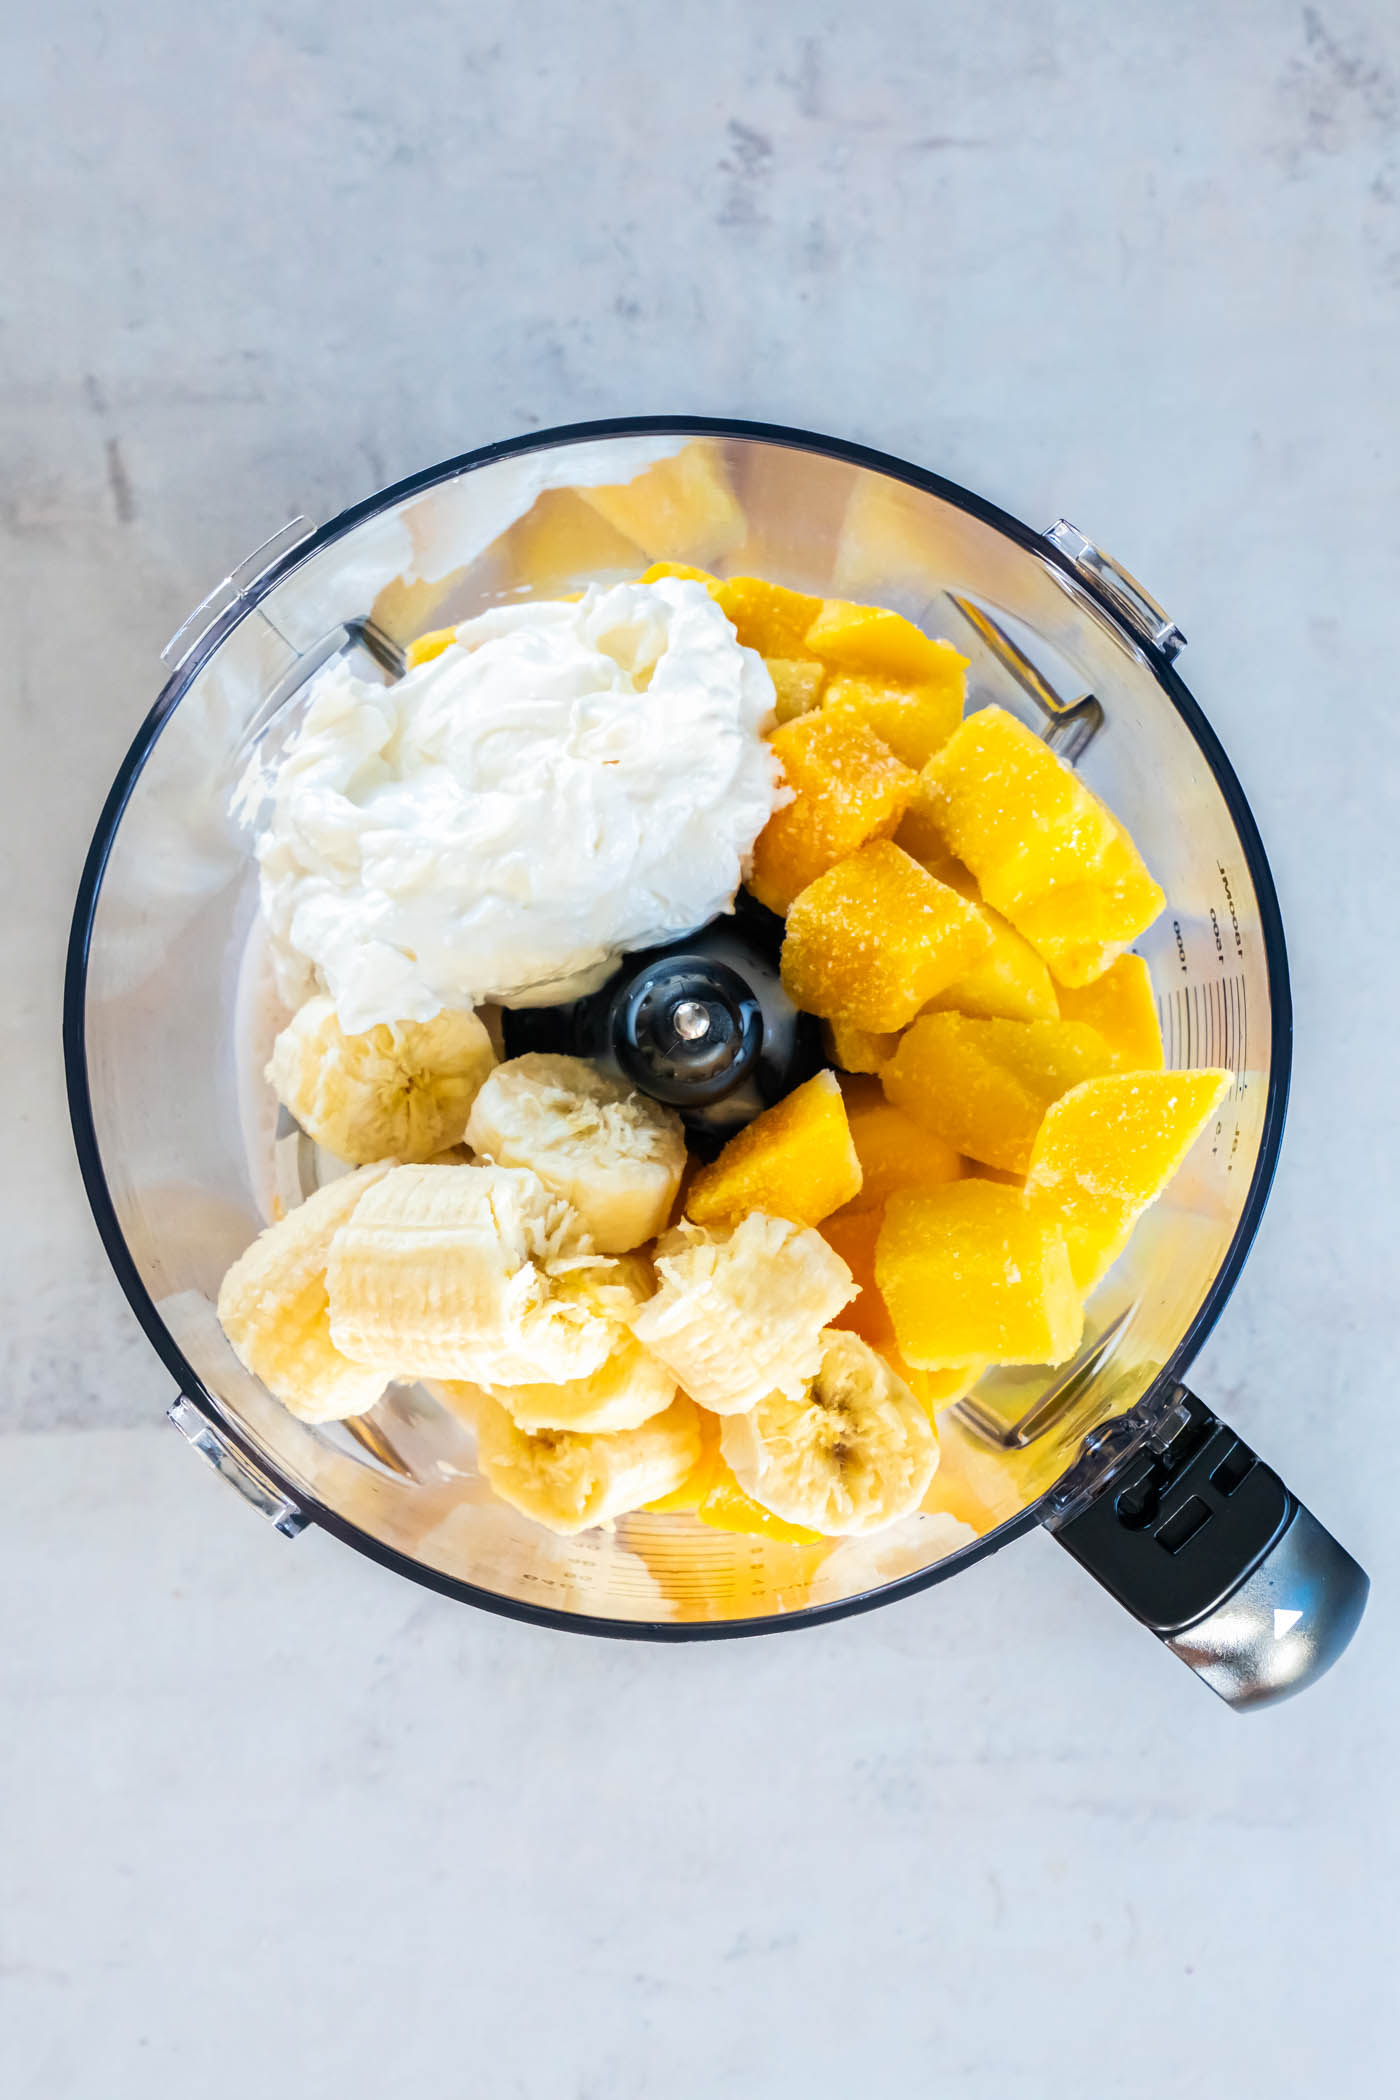 Frozen mango, banana, Greek yogurt and almond milk in a blender.